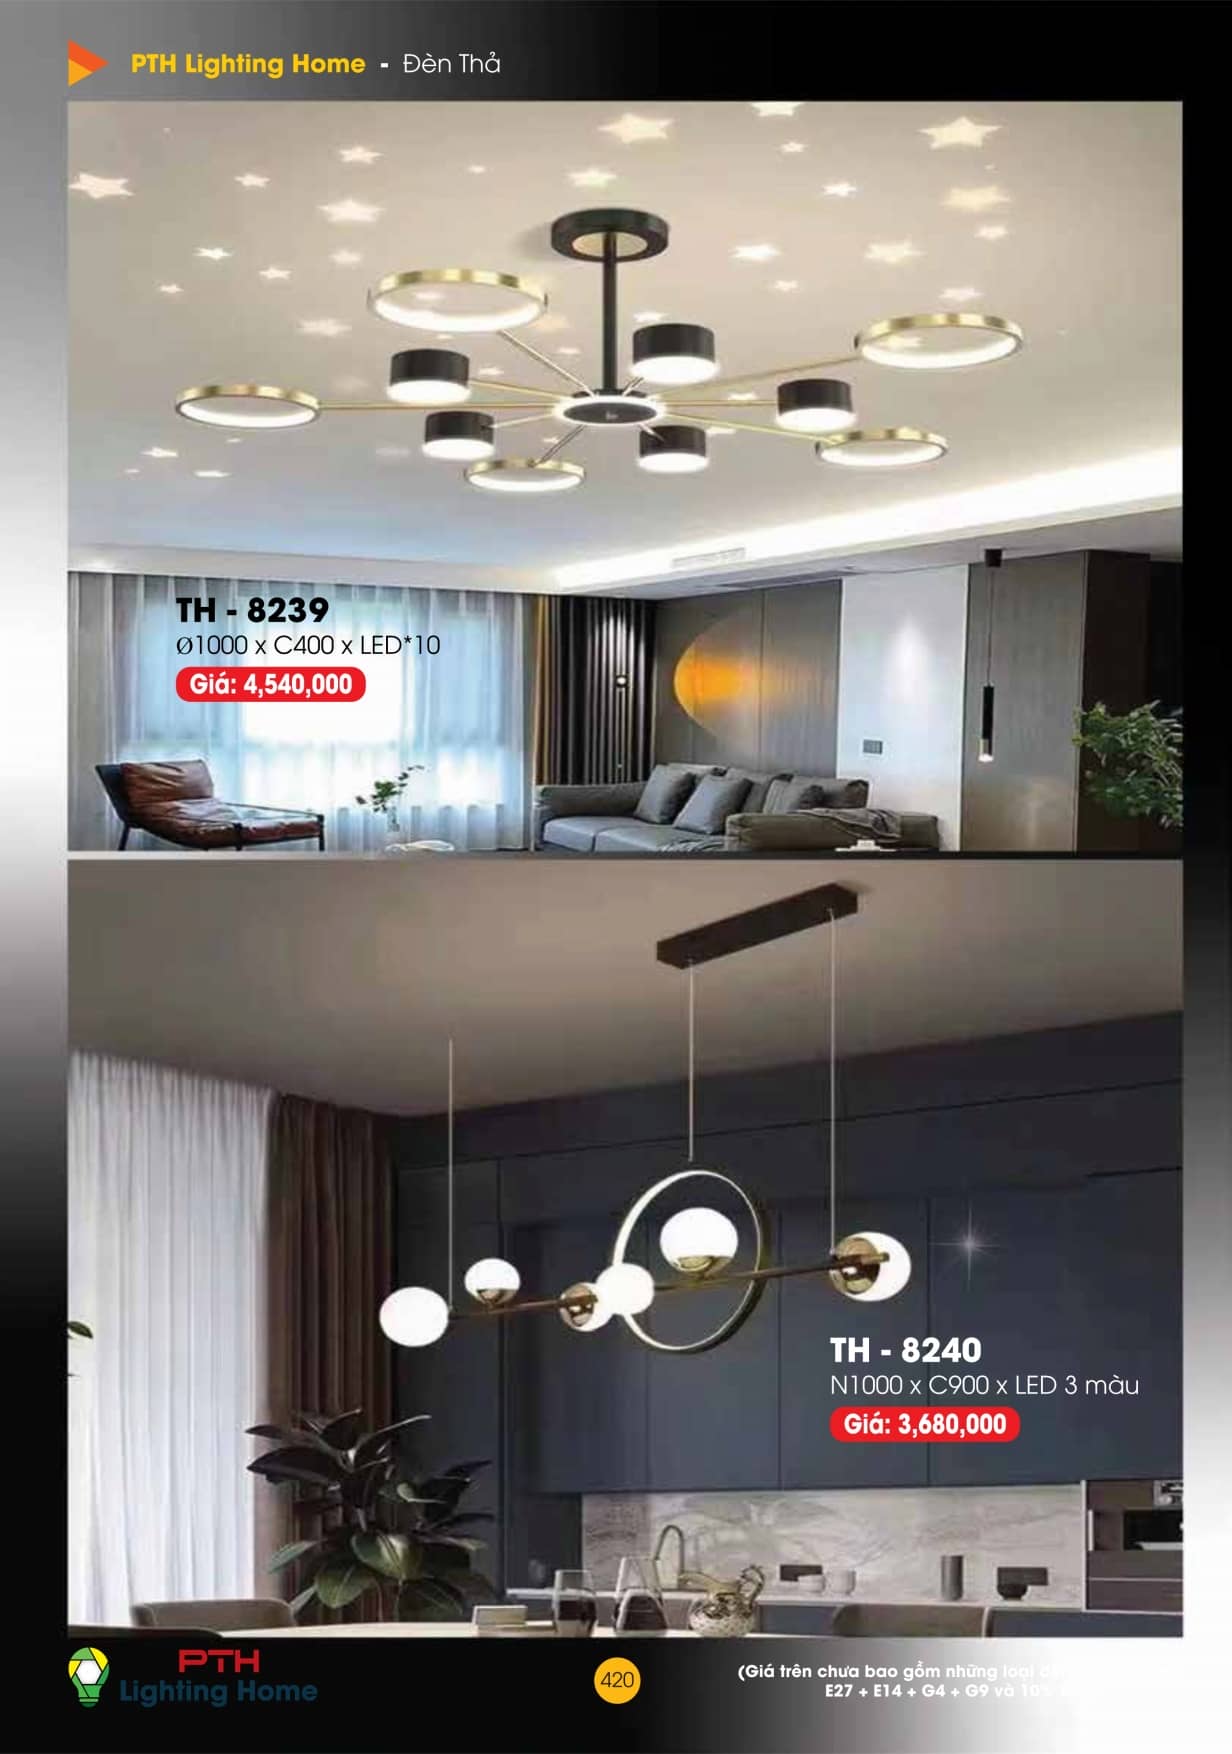 catalogue-bang-gia-den-led-trang-tri-pth-lighting-home-422